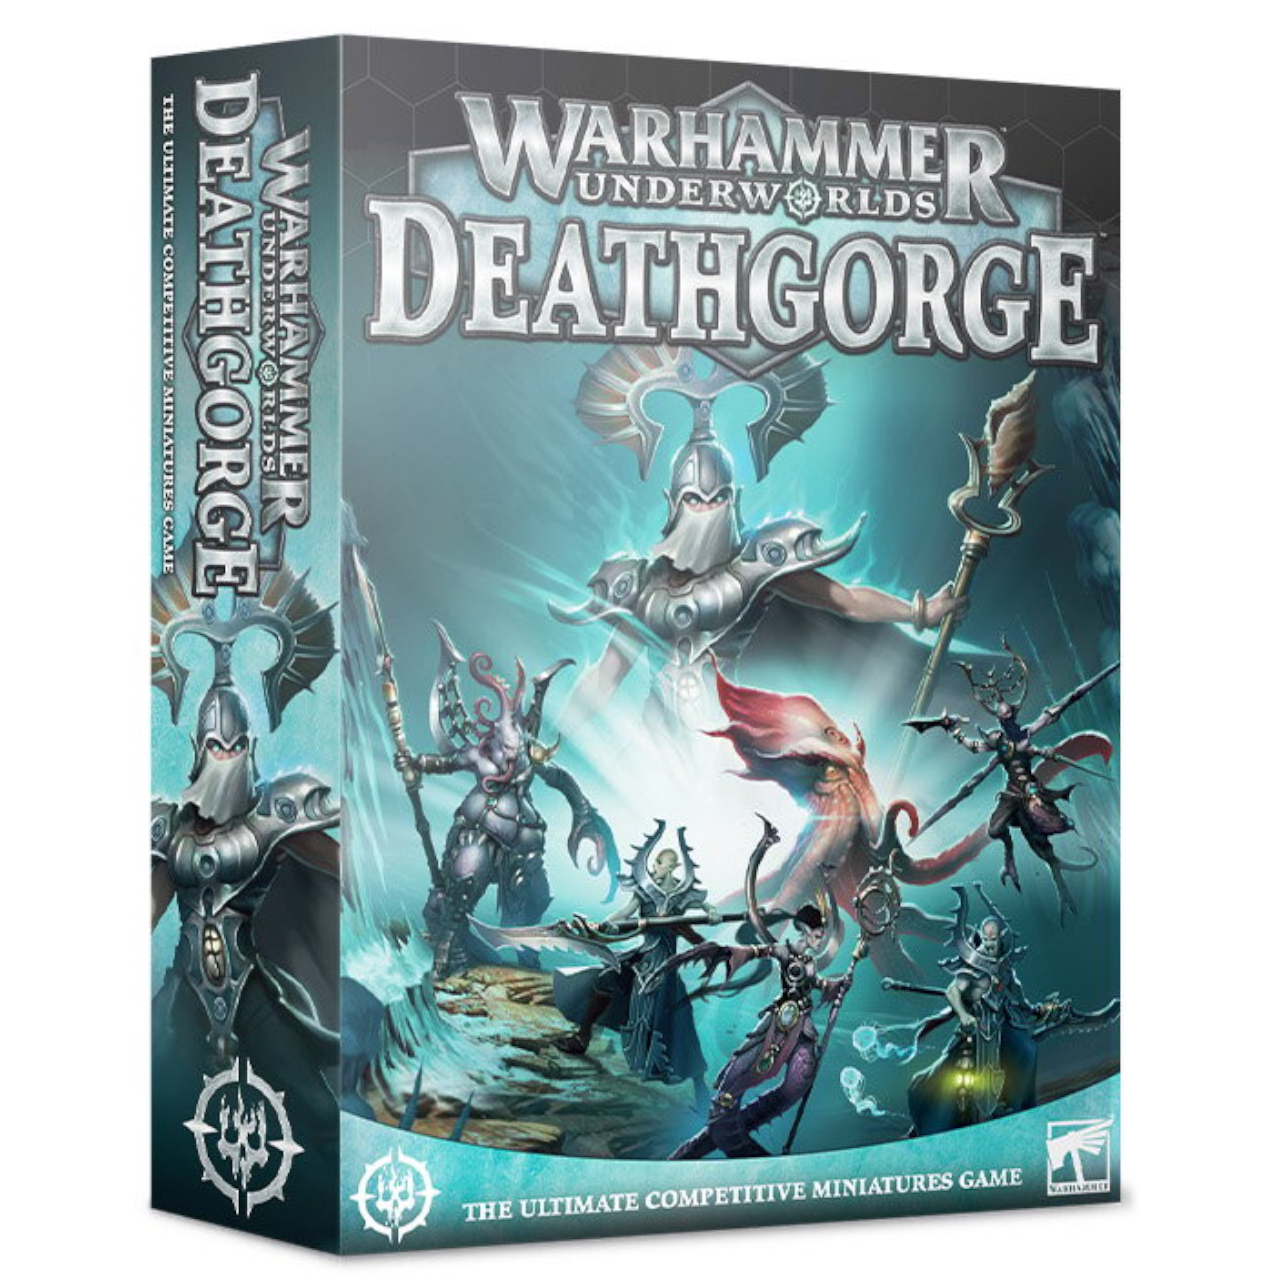 Warhammer Underworlds: Pudełko Deathgorge na gładkim tle